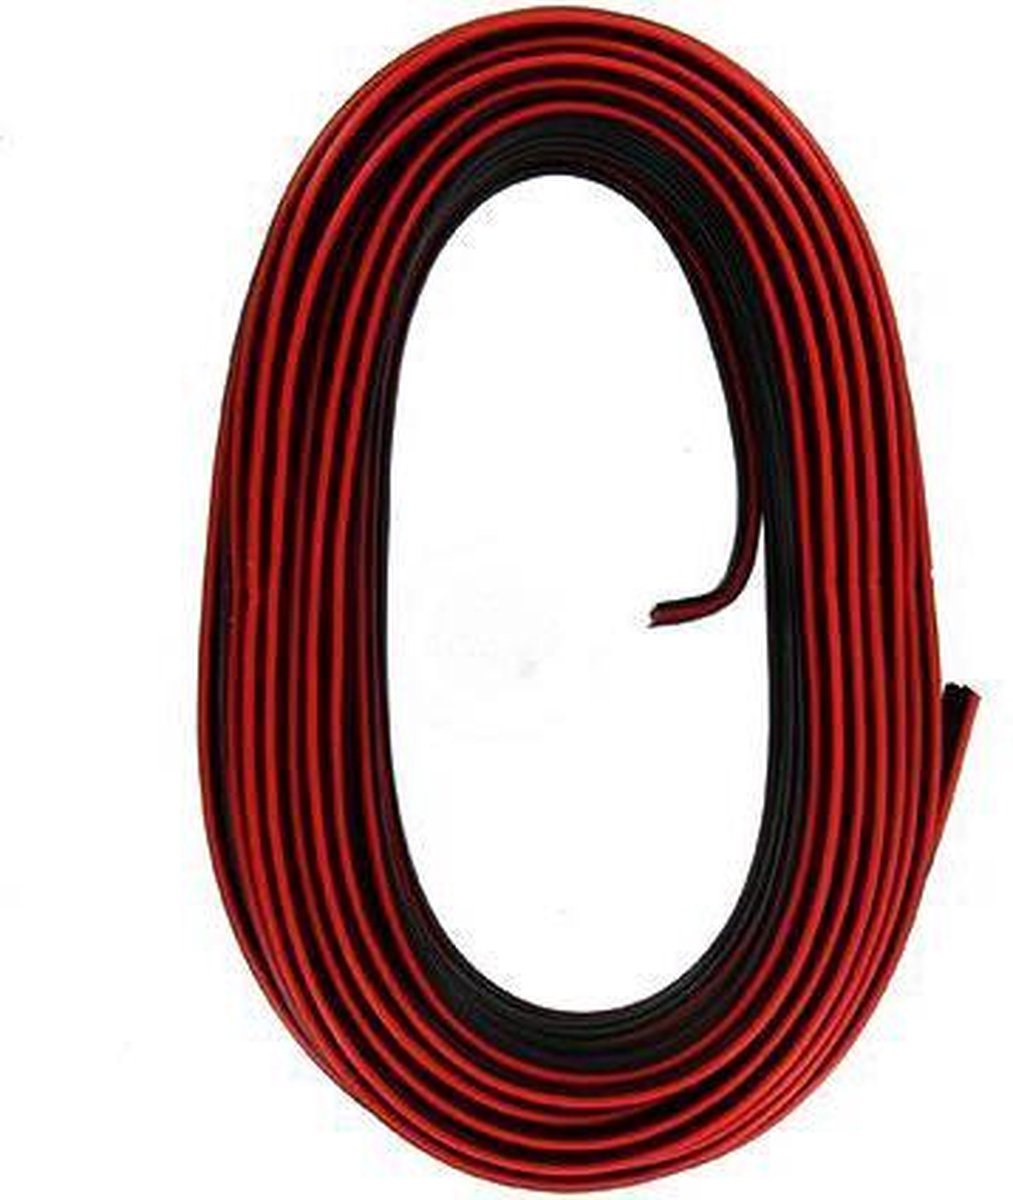 gewicht De kamer schoonmaken Glimmend Kopp luidsprekersnoer 2x1,5mm 10m zwart/rood | bol.com